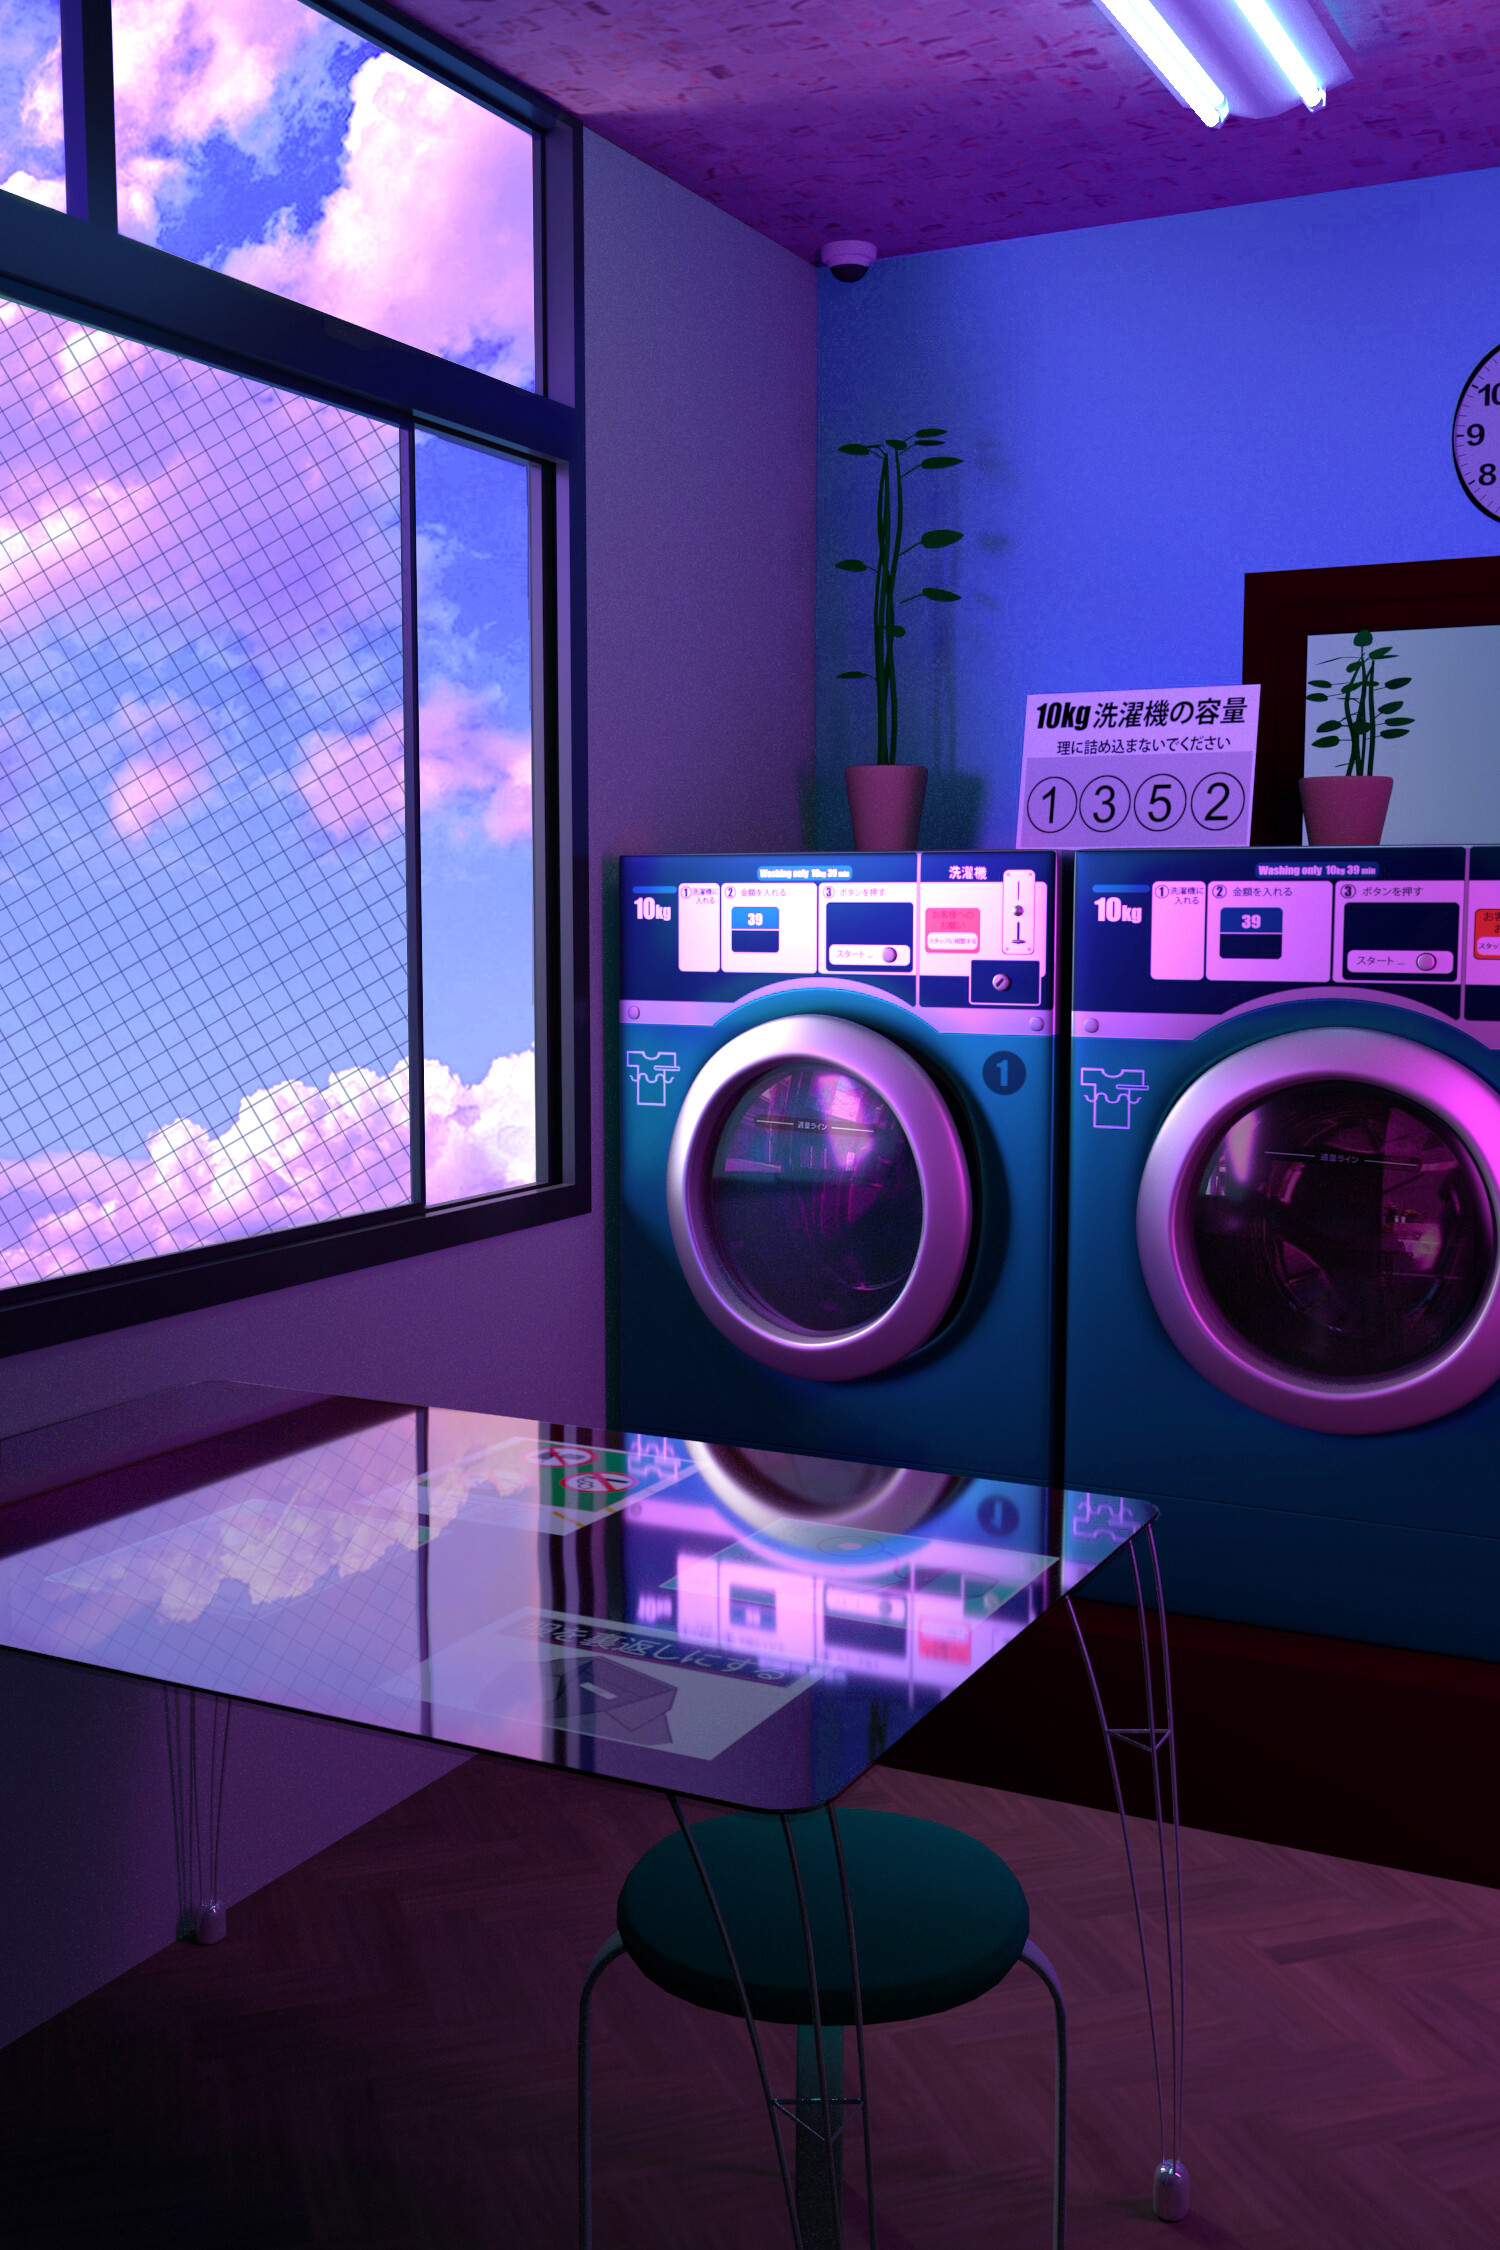 laundry room design light purple